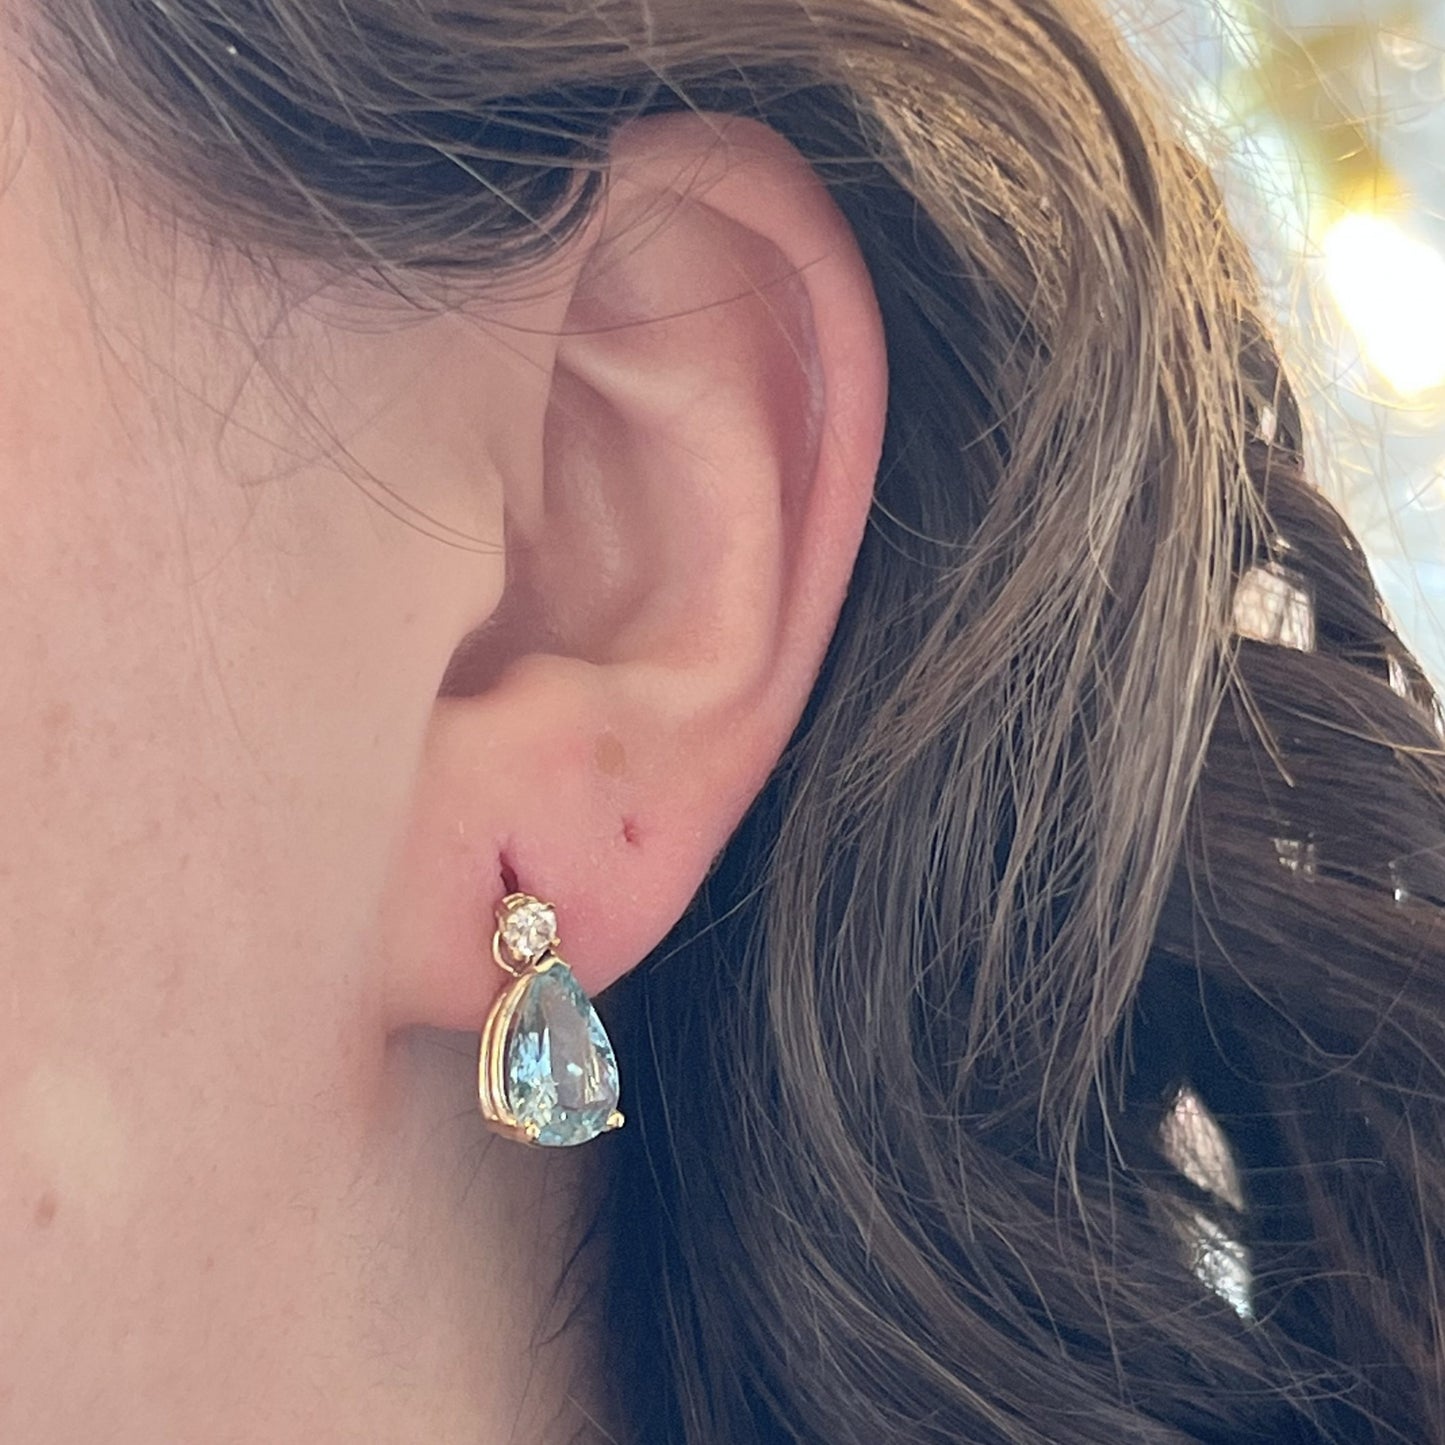 Elegant Aquamarine & Diamond Drop Earrings in 14k Yellow Gold